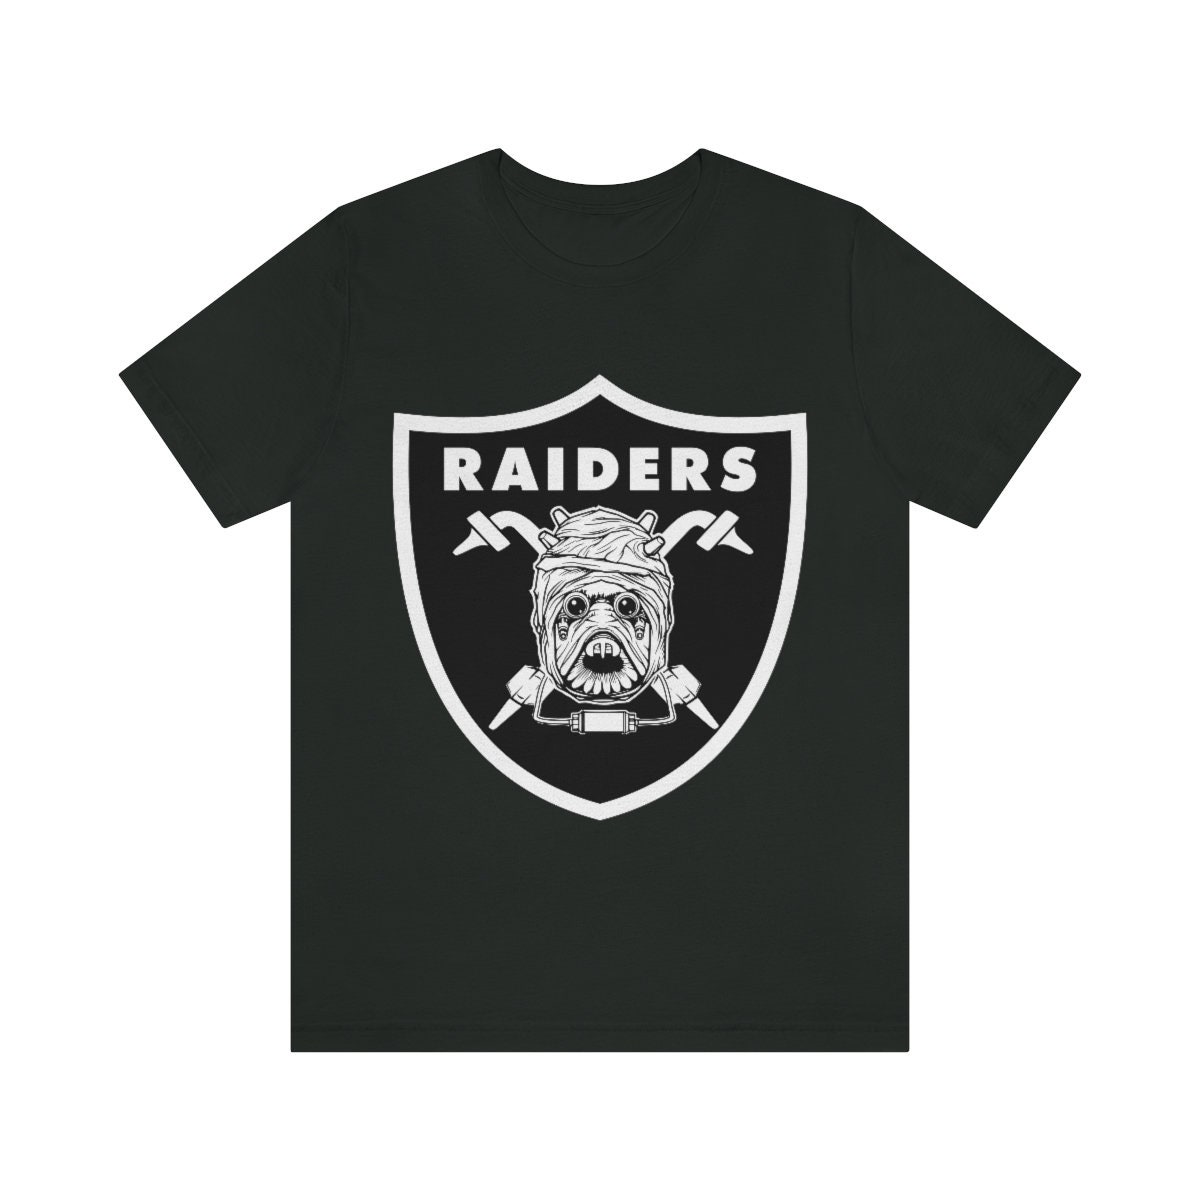 Tusken Raiders. Fully stitched, original design. : r/hockeyjerseys